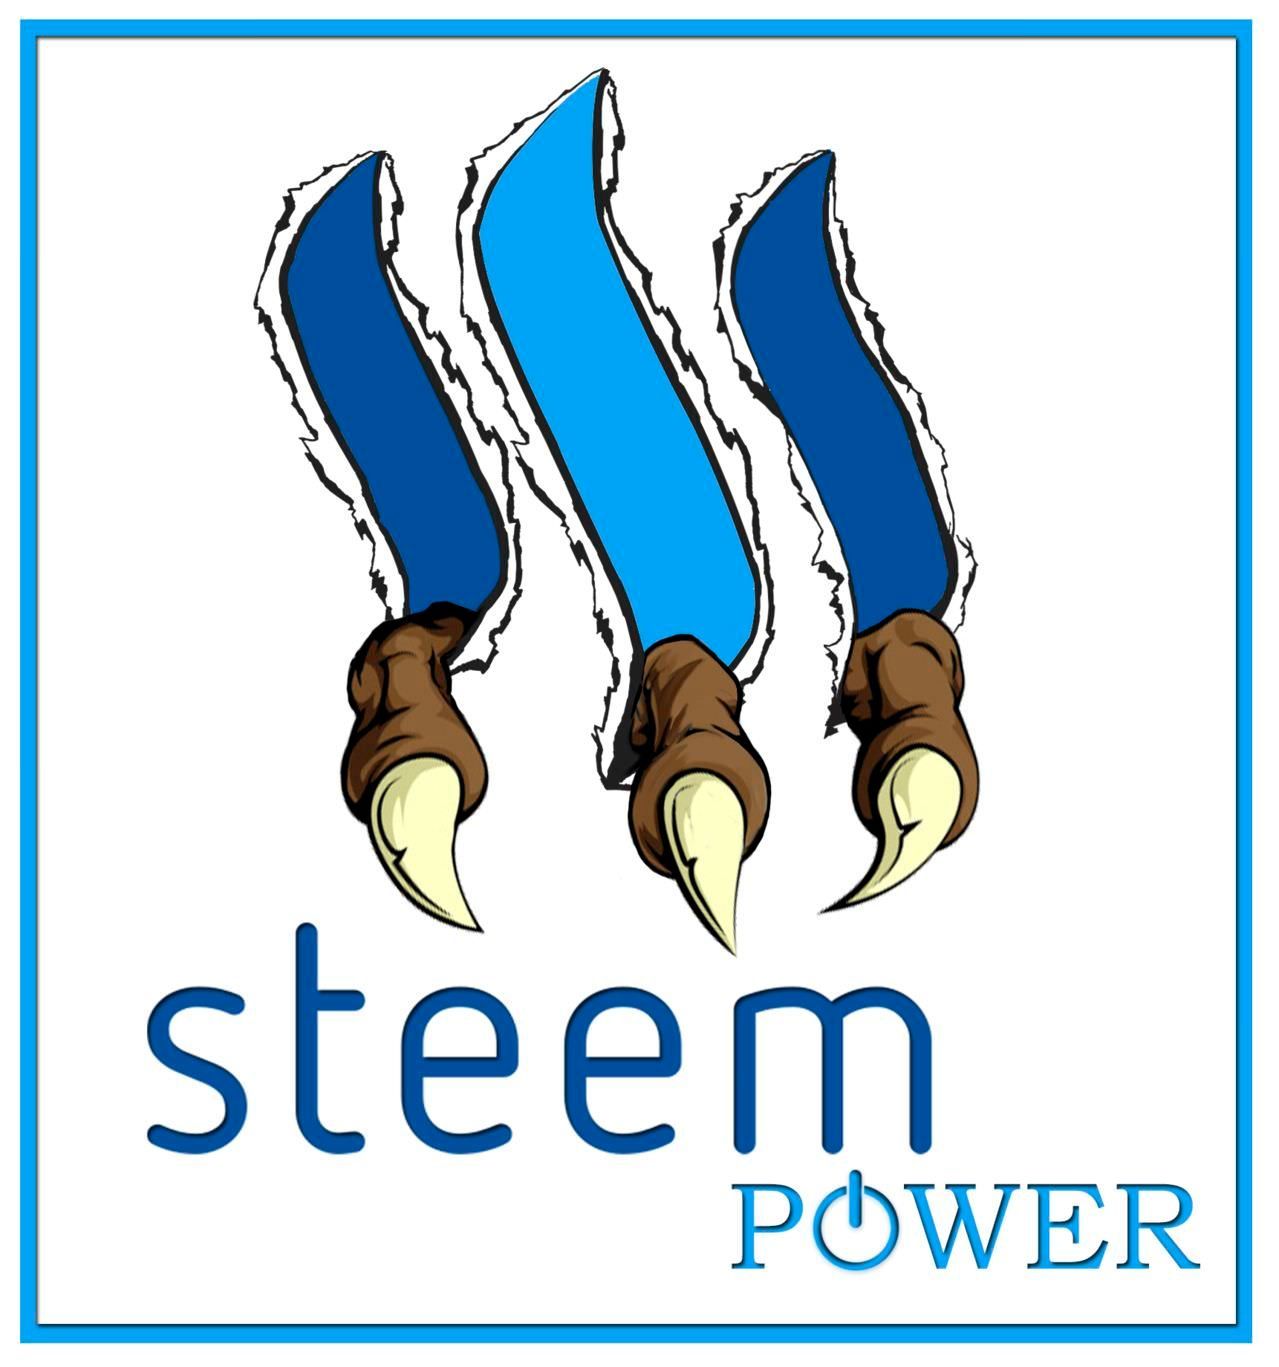 steem power logo.jpg